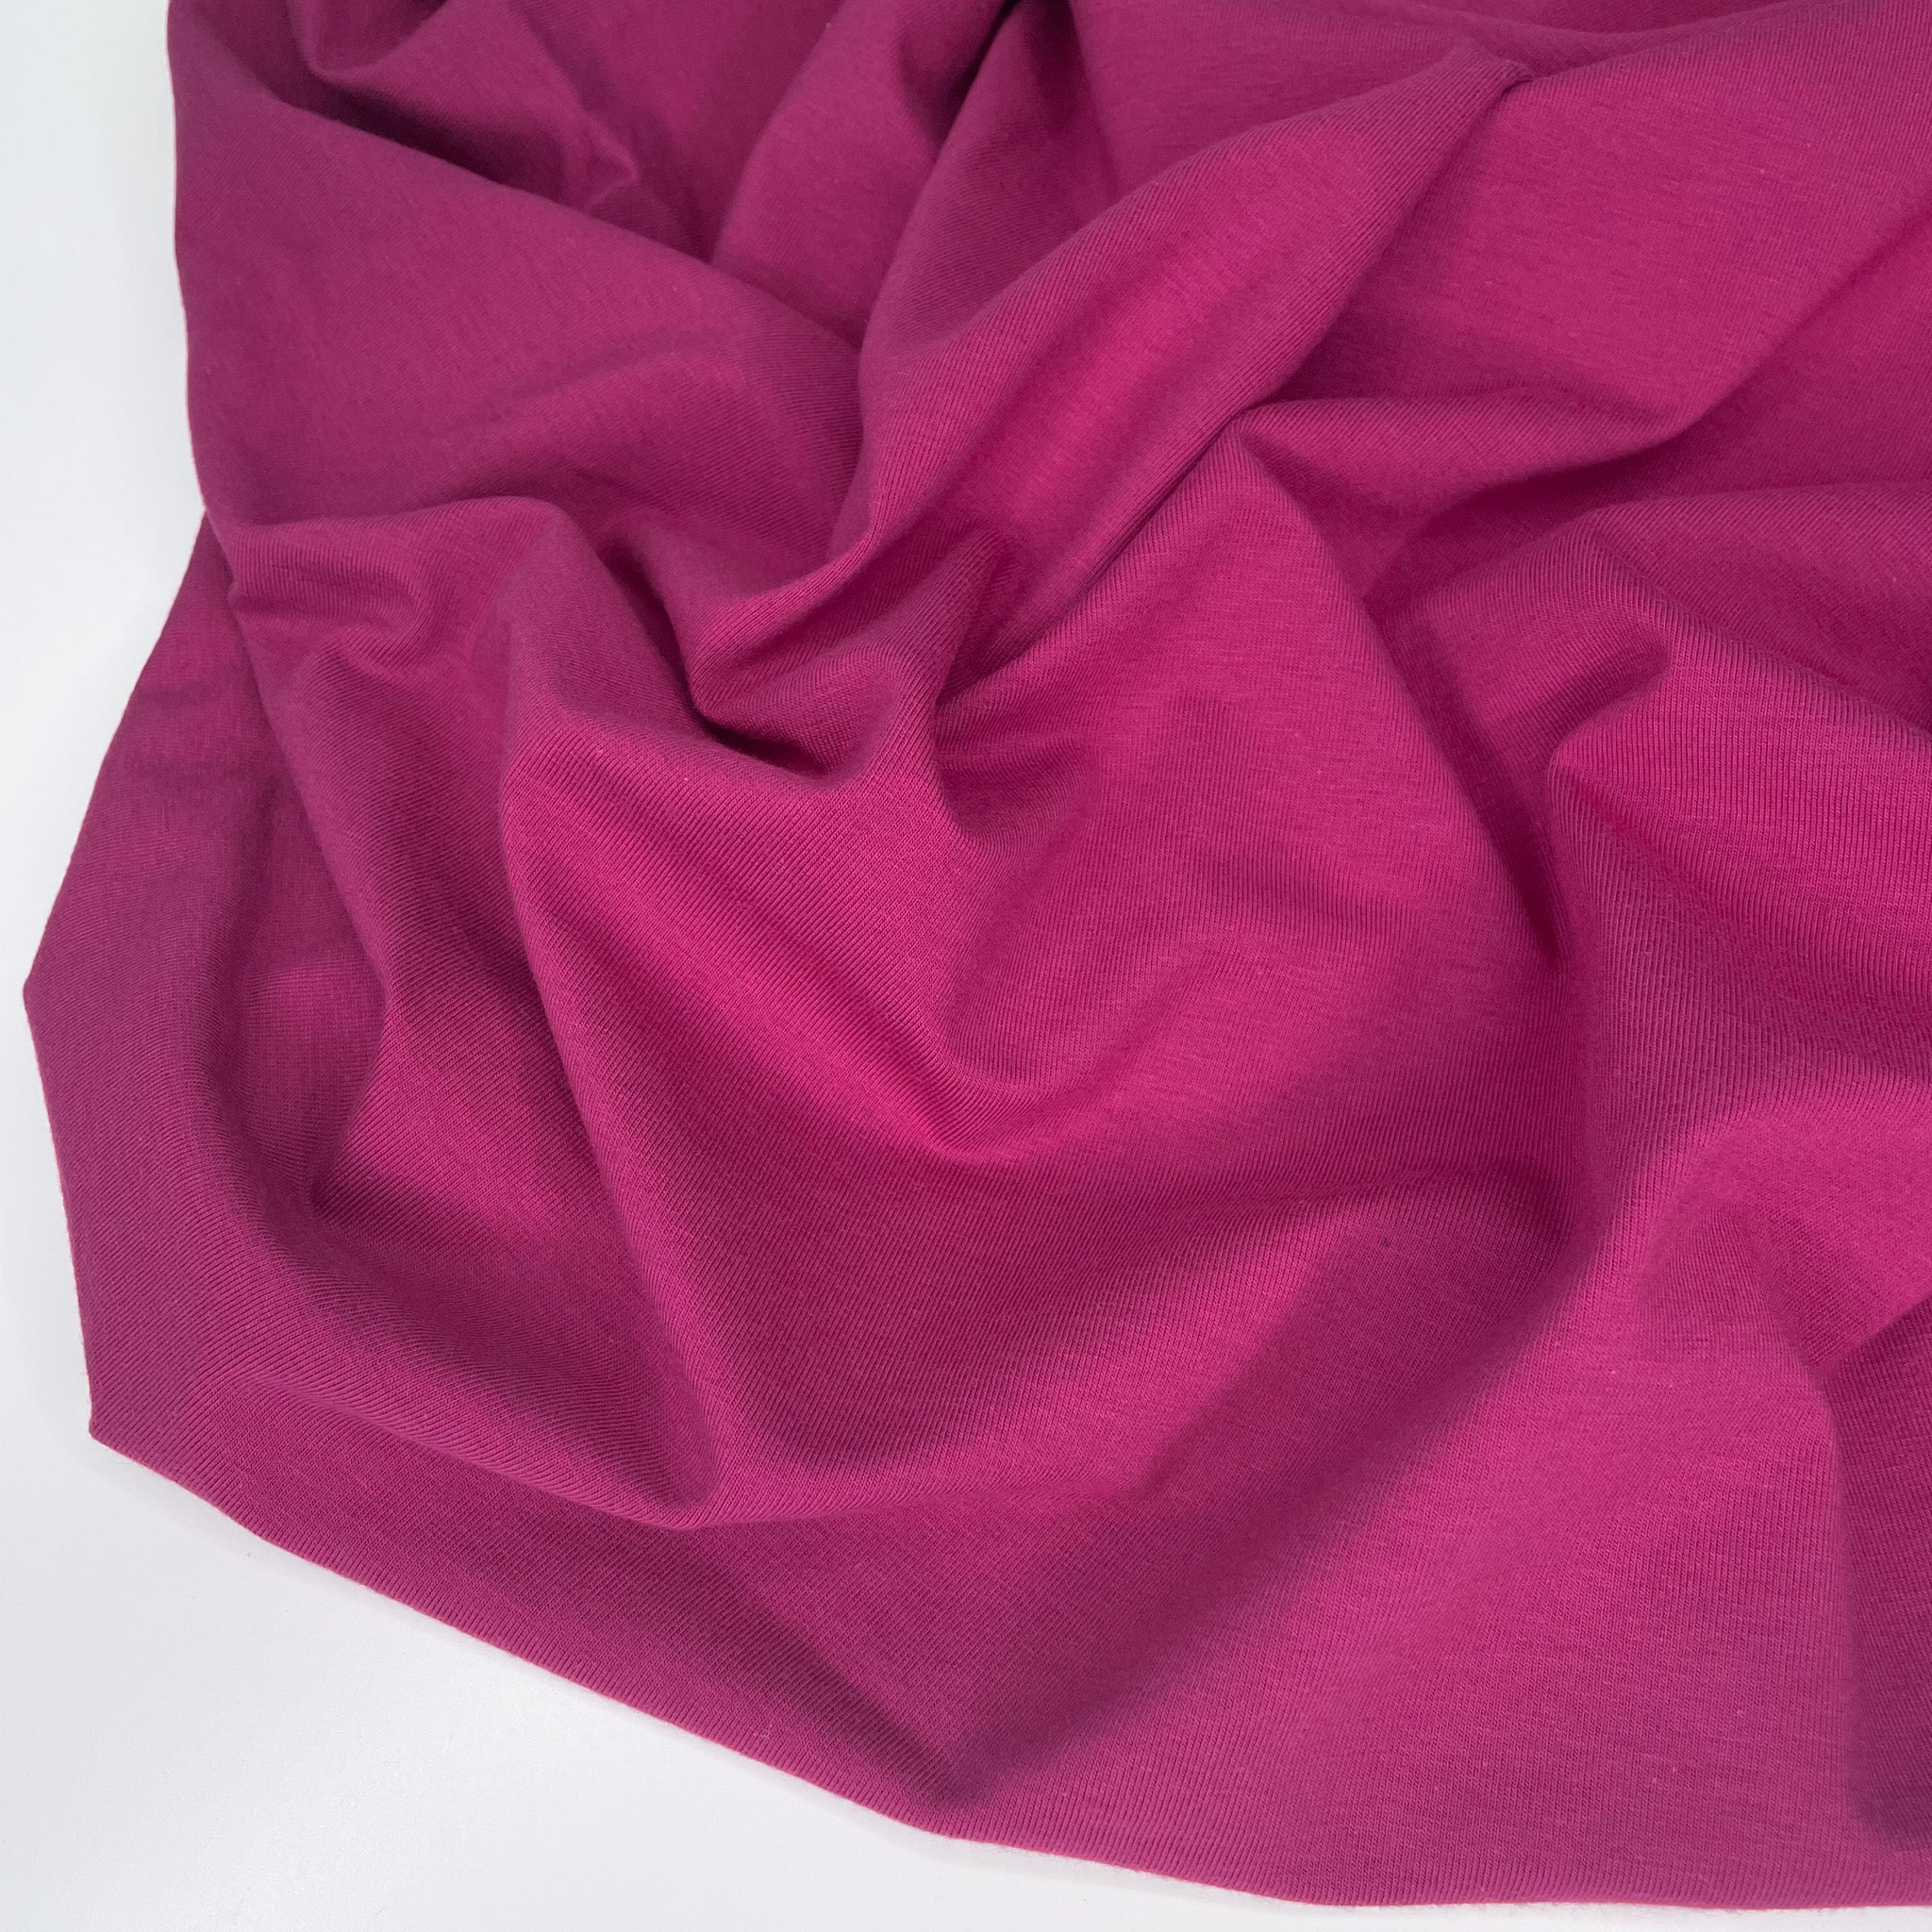 Fabric, Knit Hudson Cotton /TENCEL / Spandex Blend - Raspberry